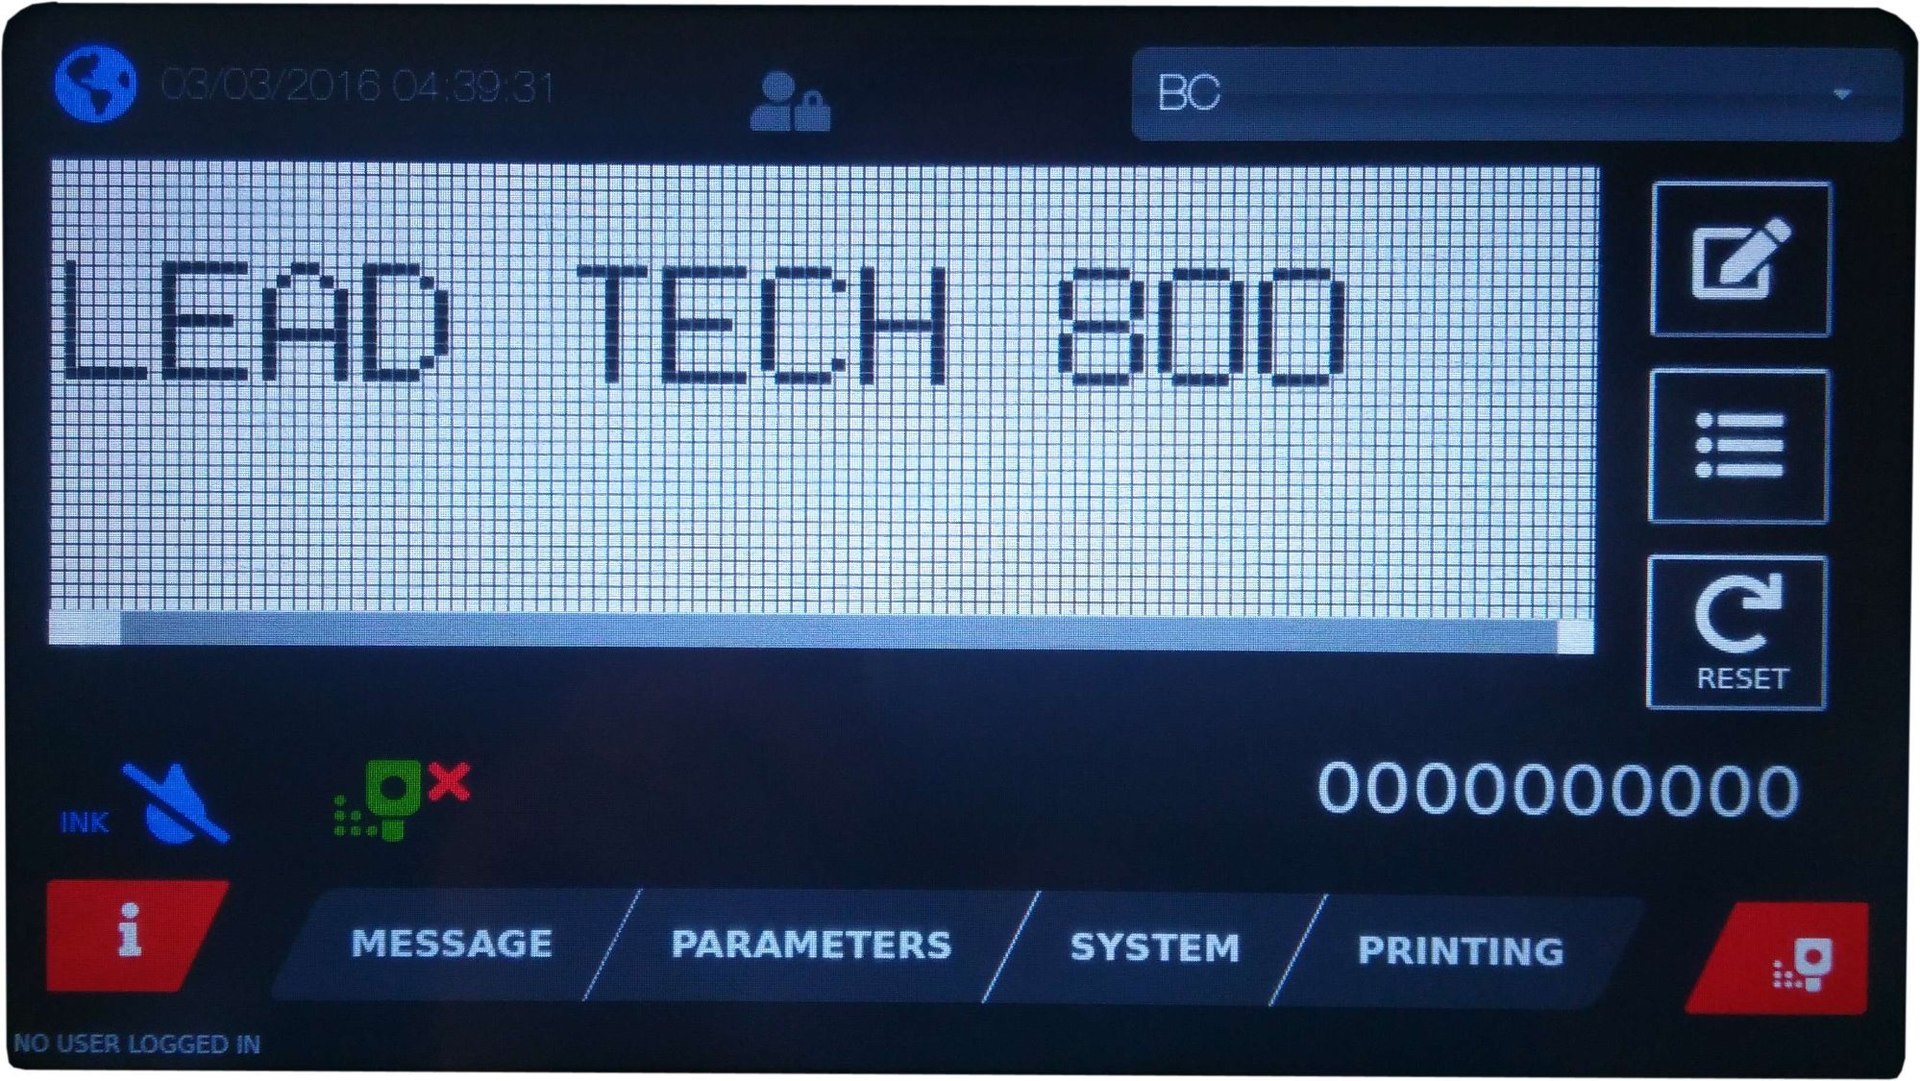 Lead Tech Lt800 Cij Expiry Date Inkjet Printer